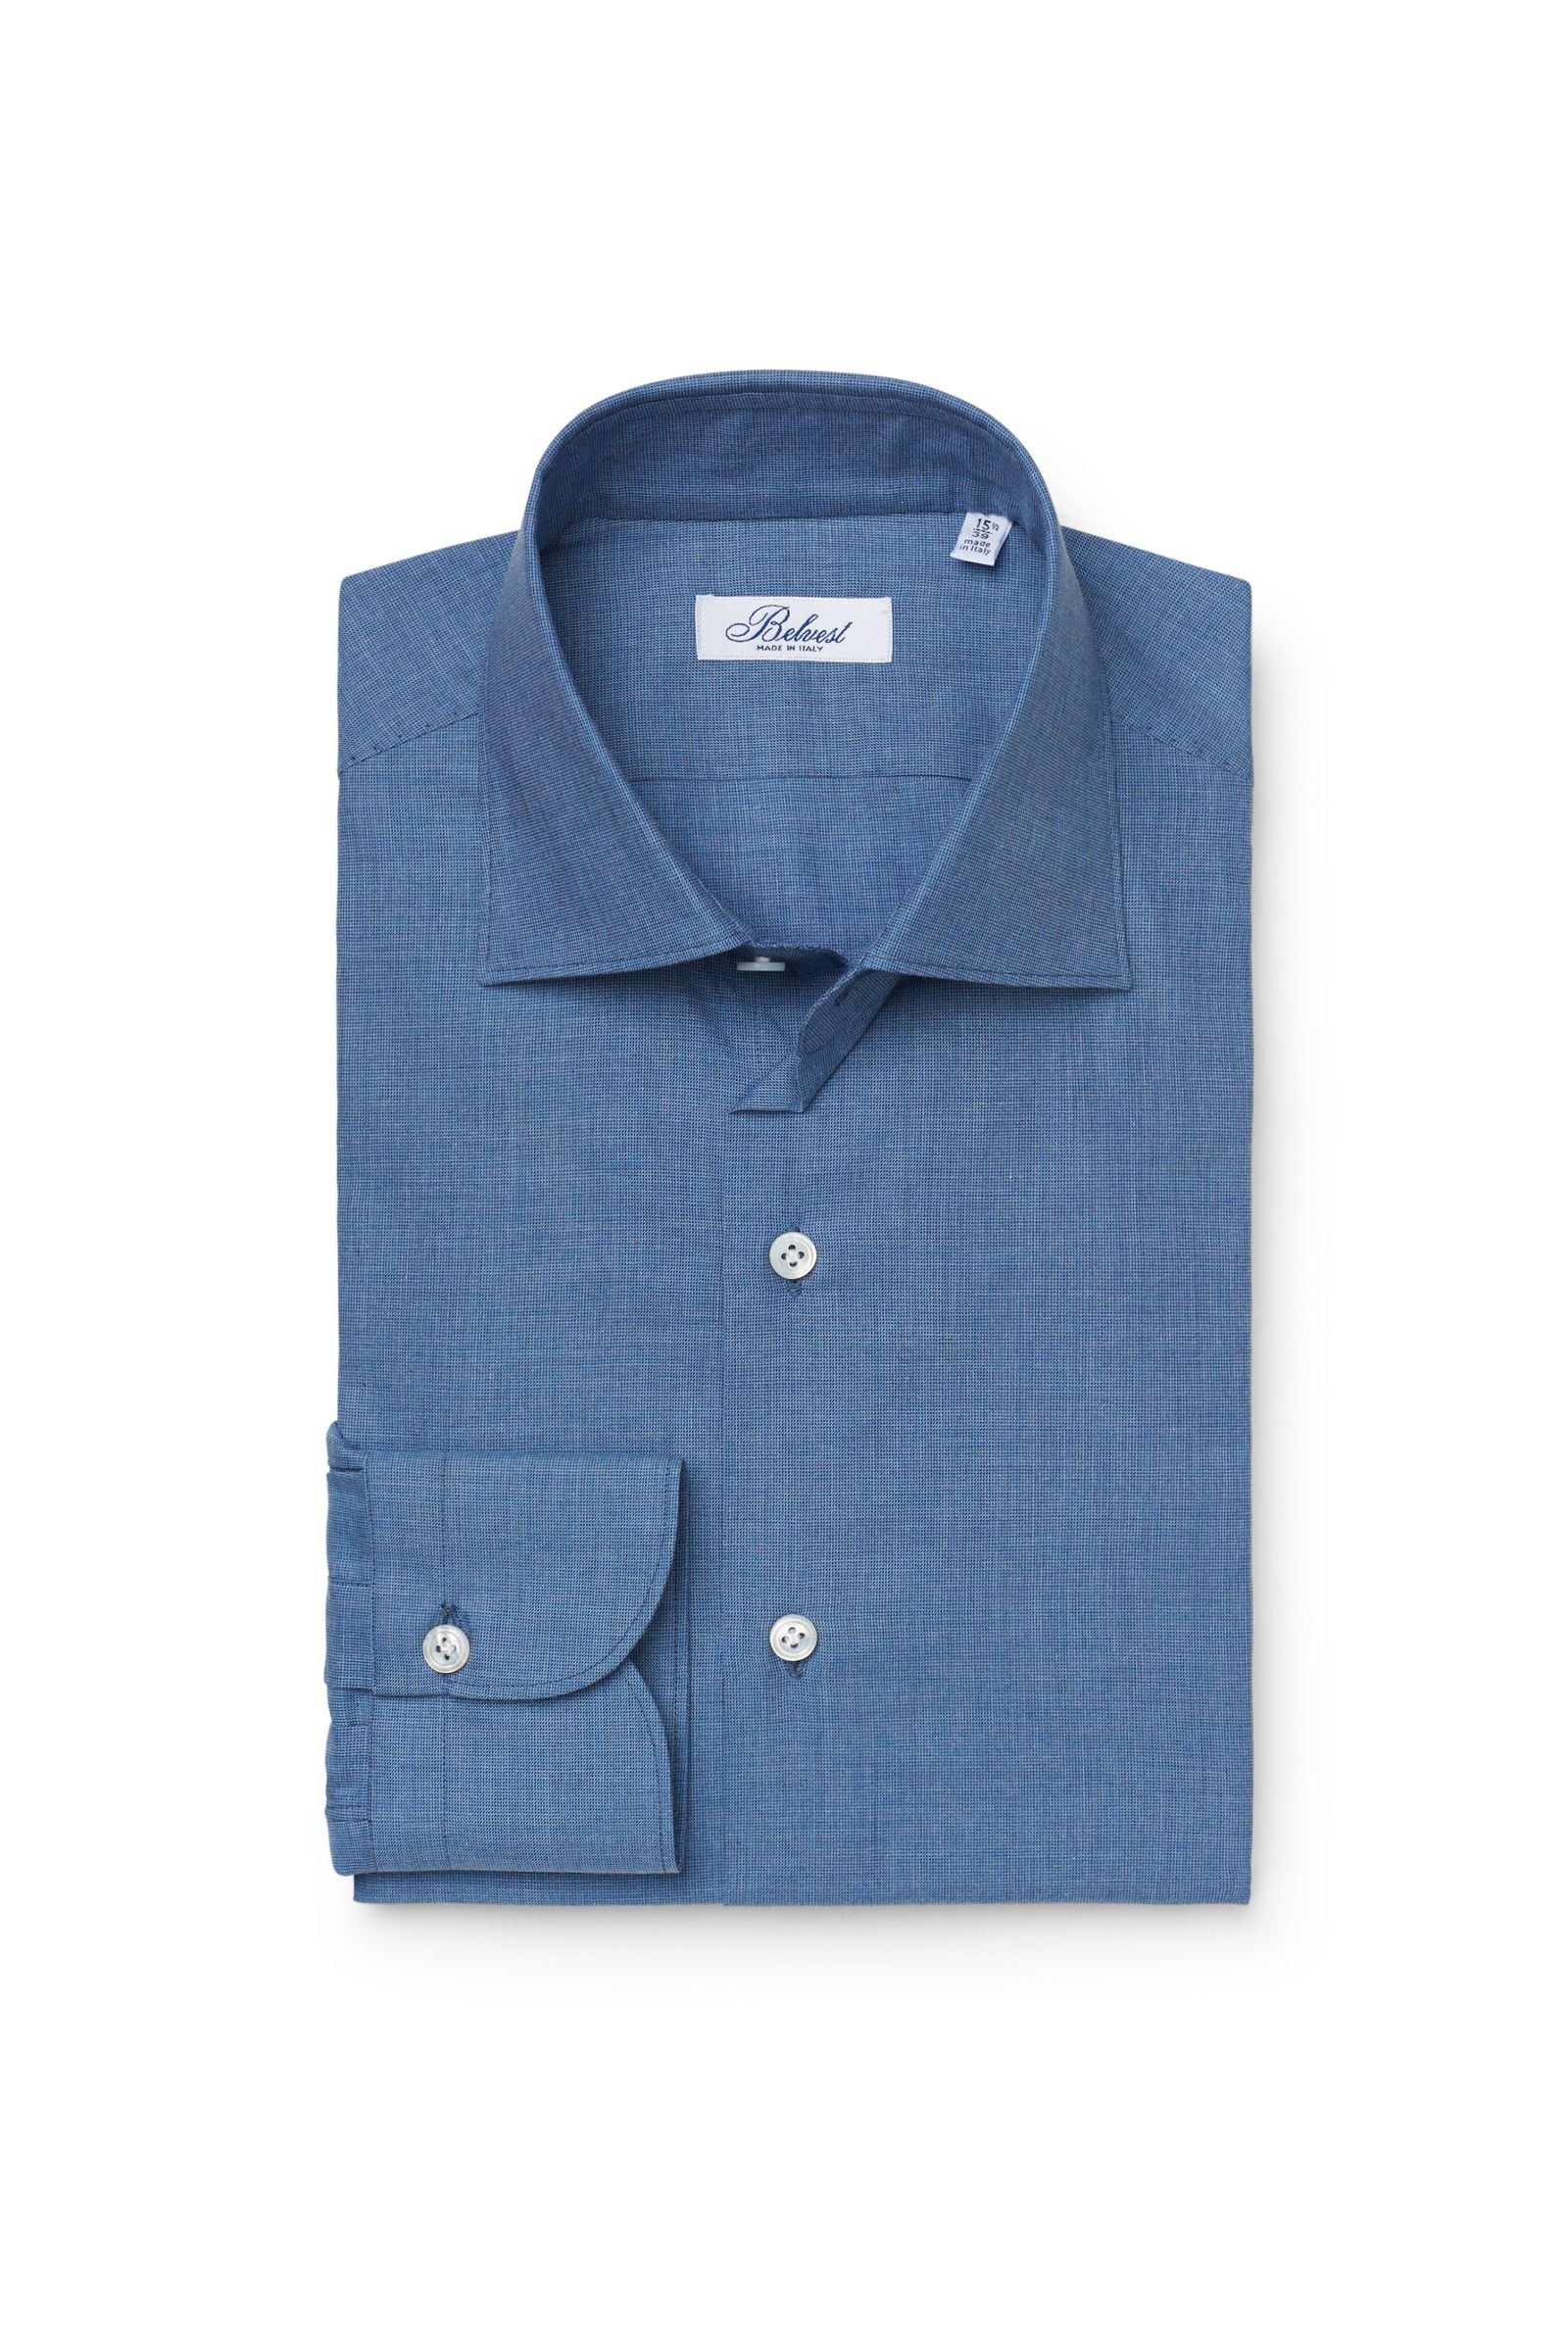 Business shirt Kent collar grey-blue